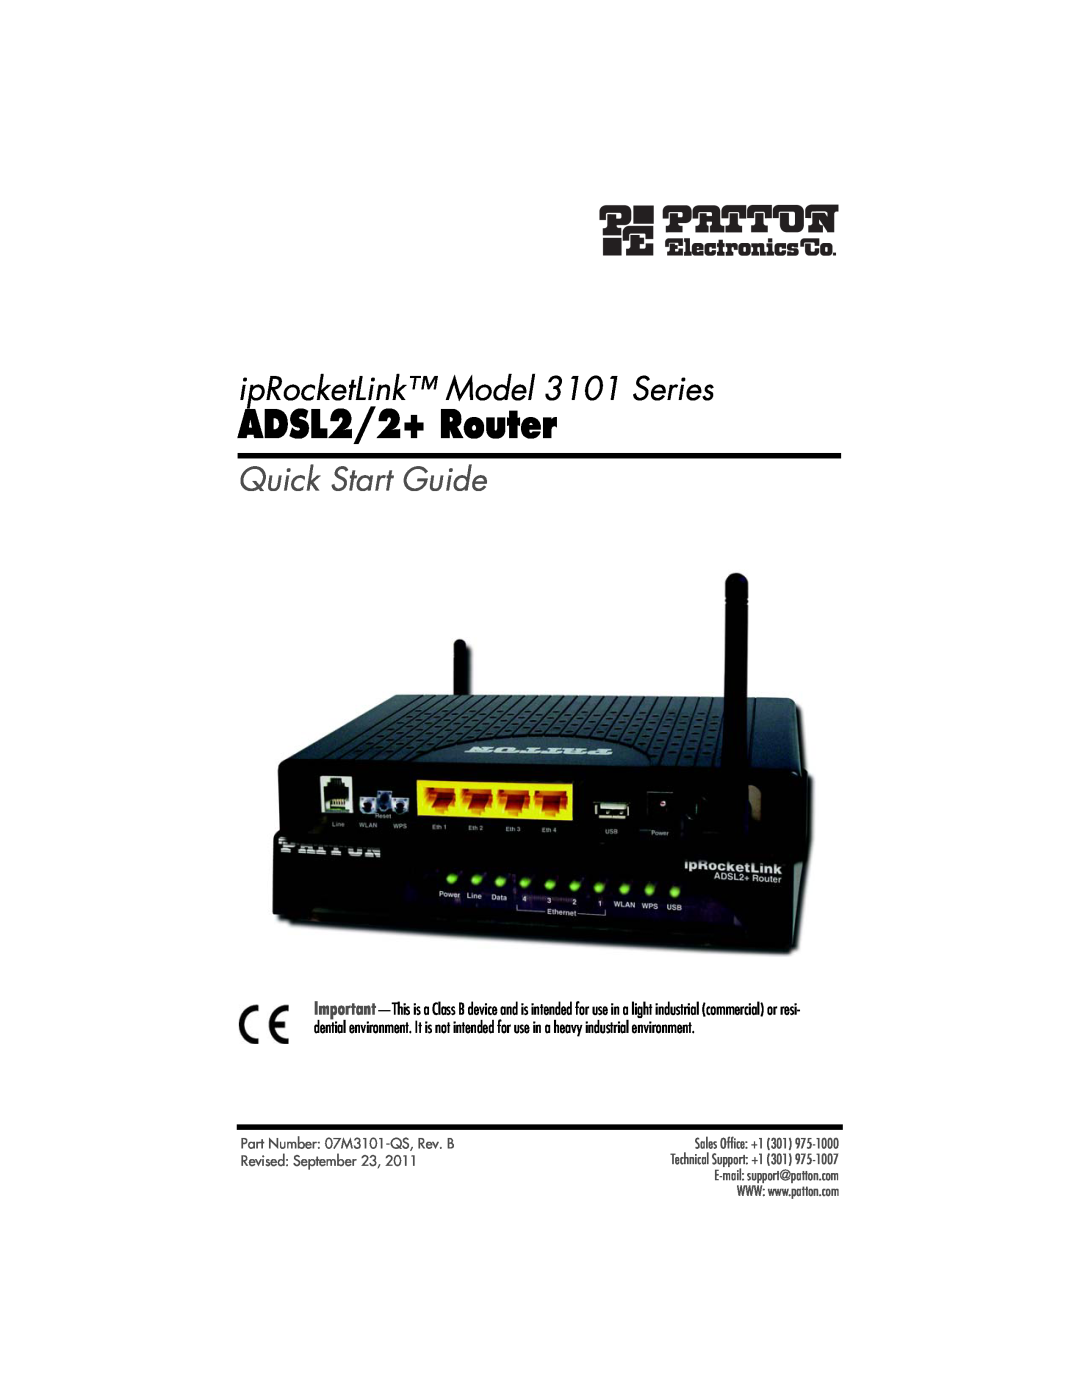 Patton electronic quick start ADSL2/2+ Router, ipRocketLink Model 3101 Series, Quick Start Guide, Revised September 